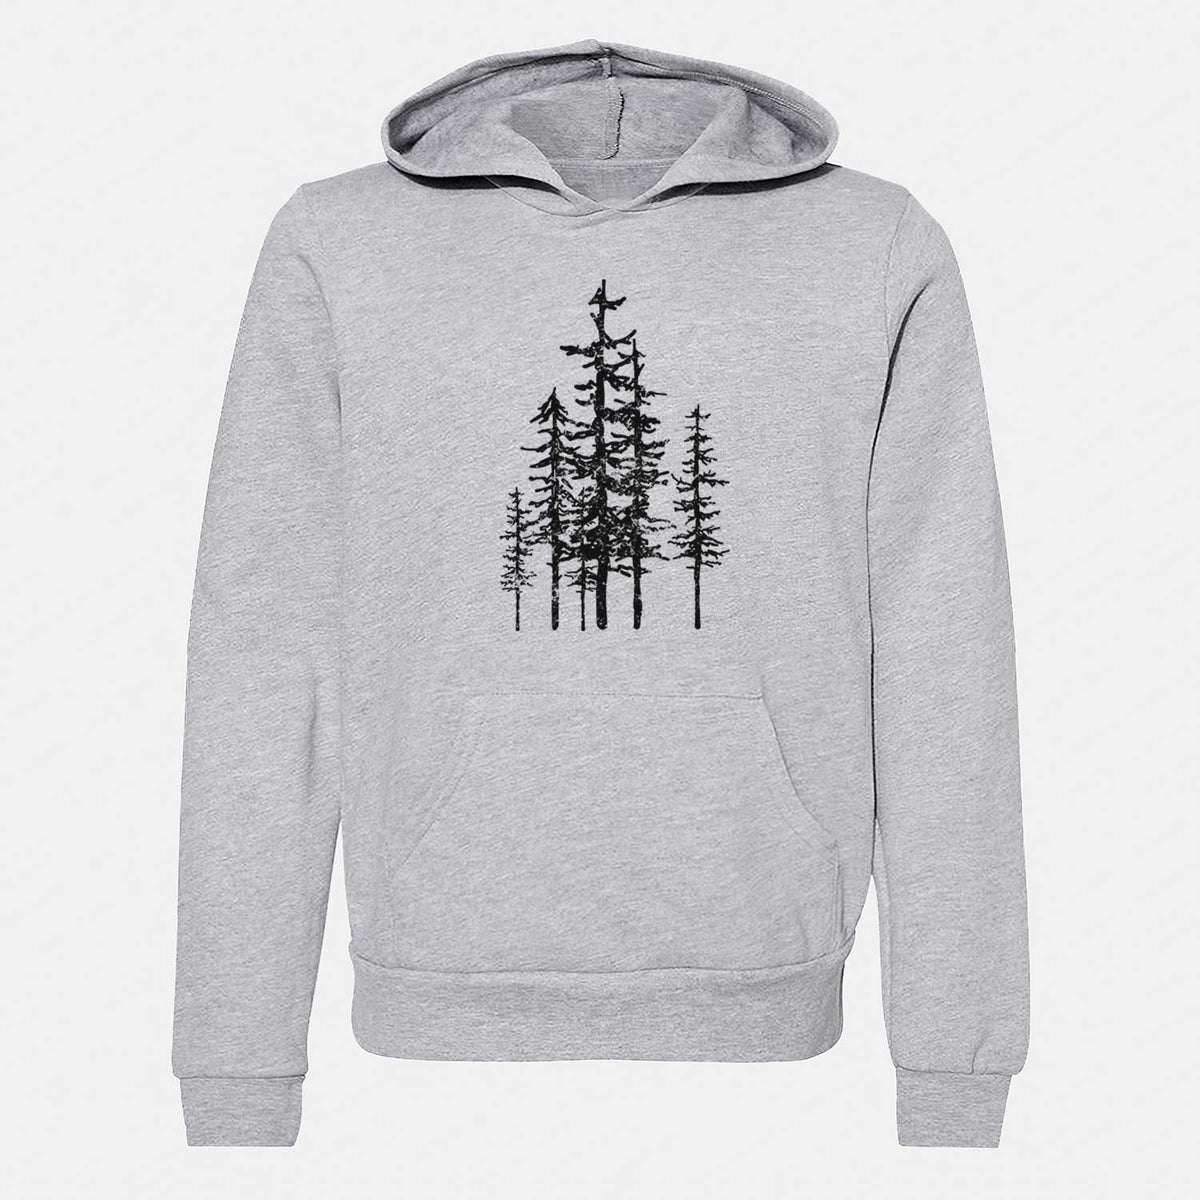 Evergreen Trees - Youth Hoodie Sweatshirt